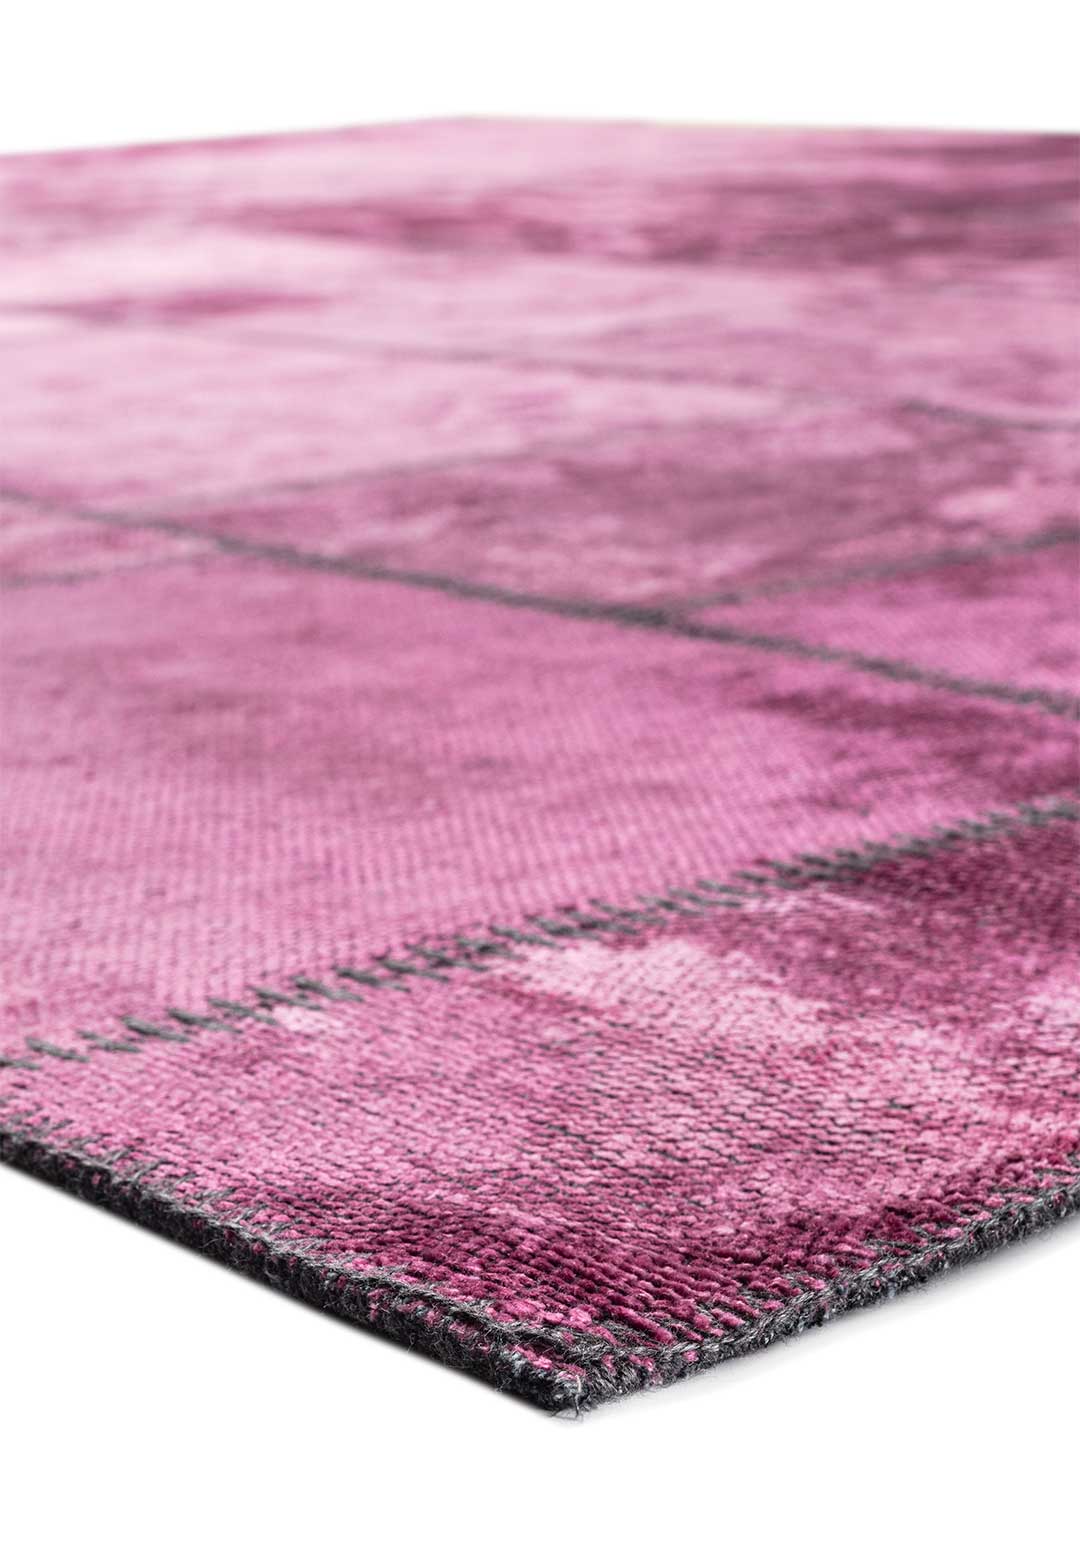 Patch Pink Rug Rugs - Venetto Design Venettodesign.com